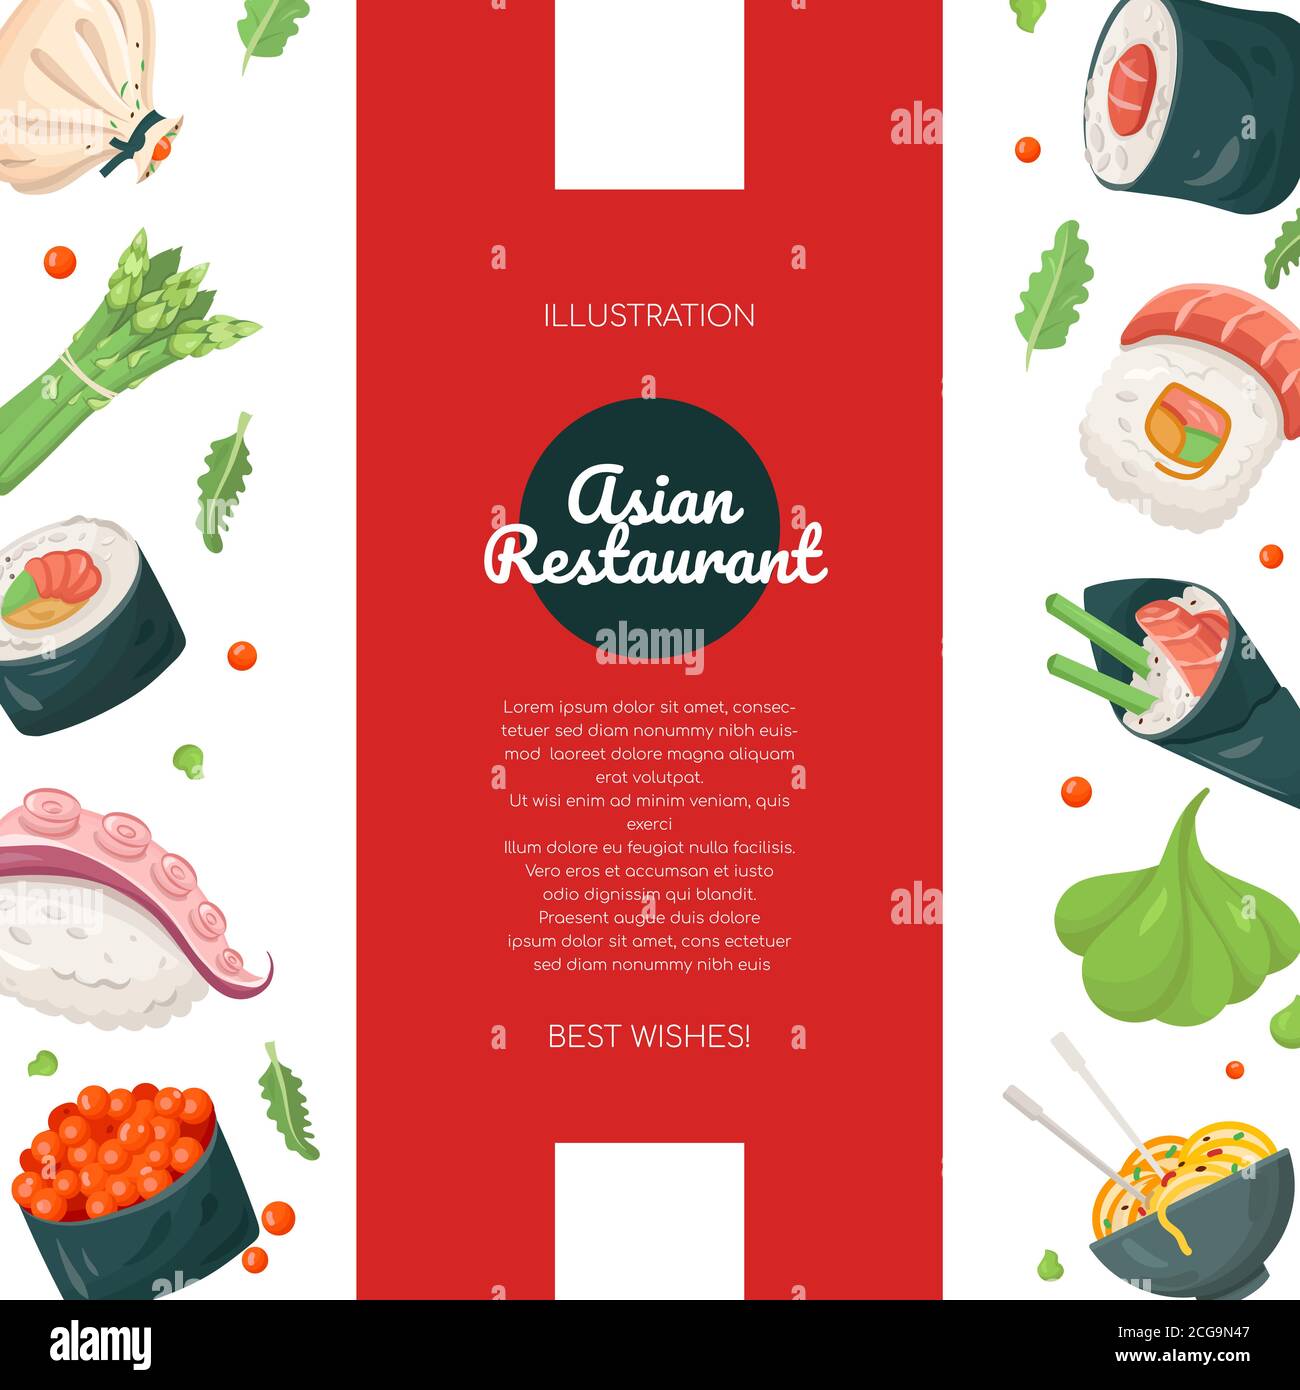 Asian restaurant - vector flat design style banner Stock Vector With Asian Restaurant Menu Template